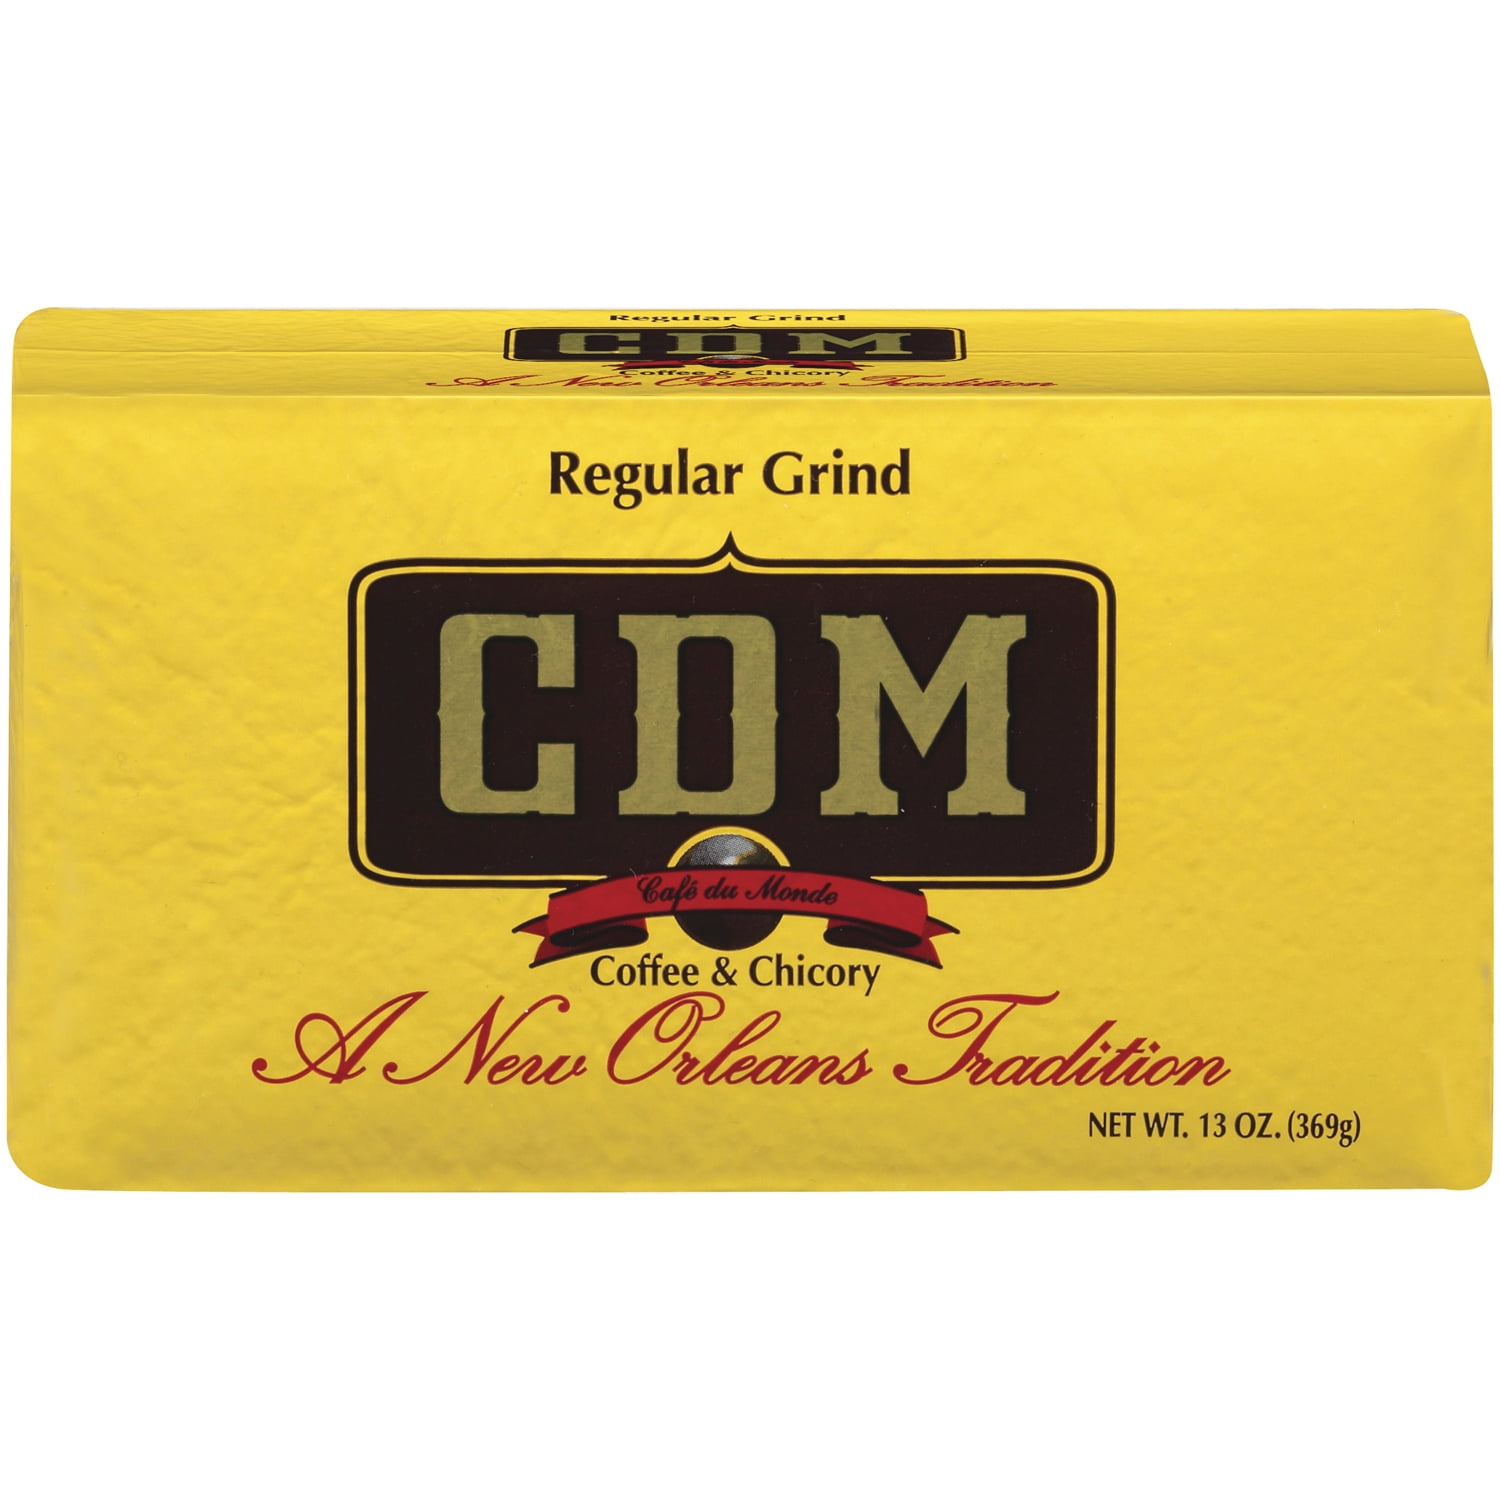 CDM Coffee & Chicory Regular Grind Ground Coffee, 13 Oz